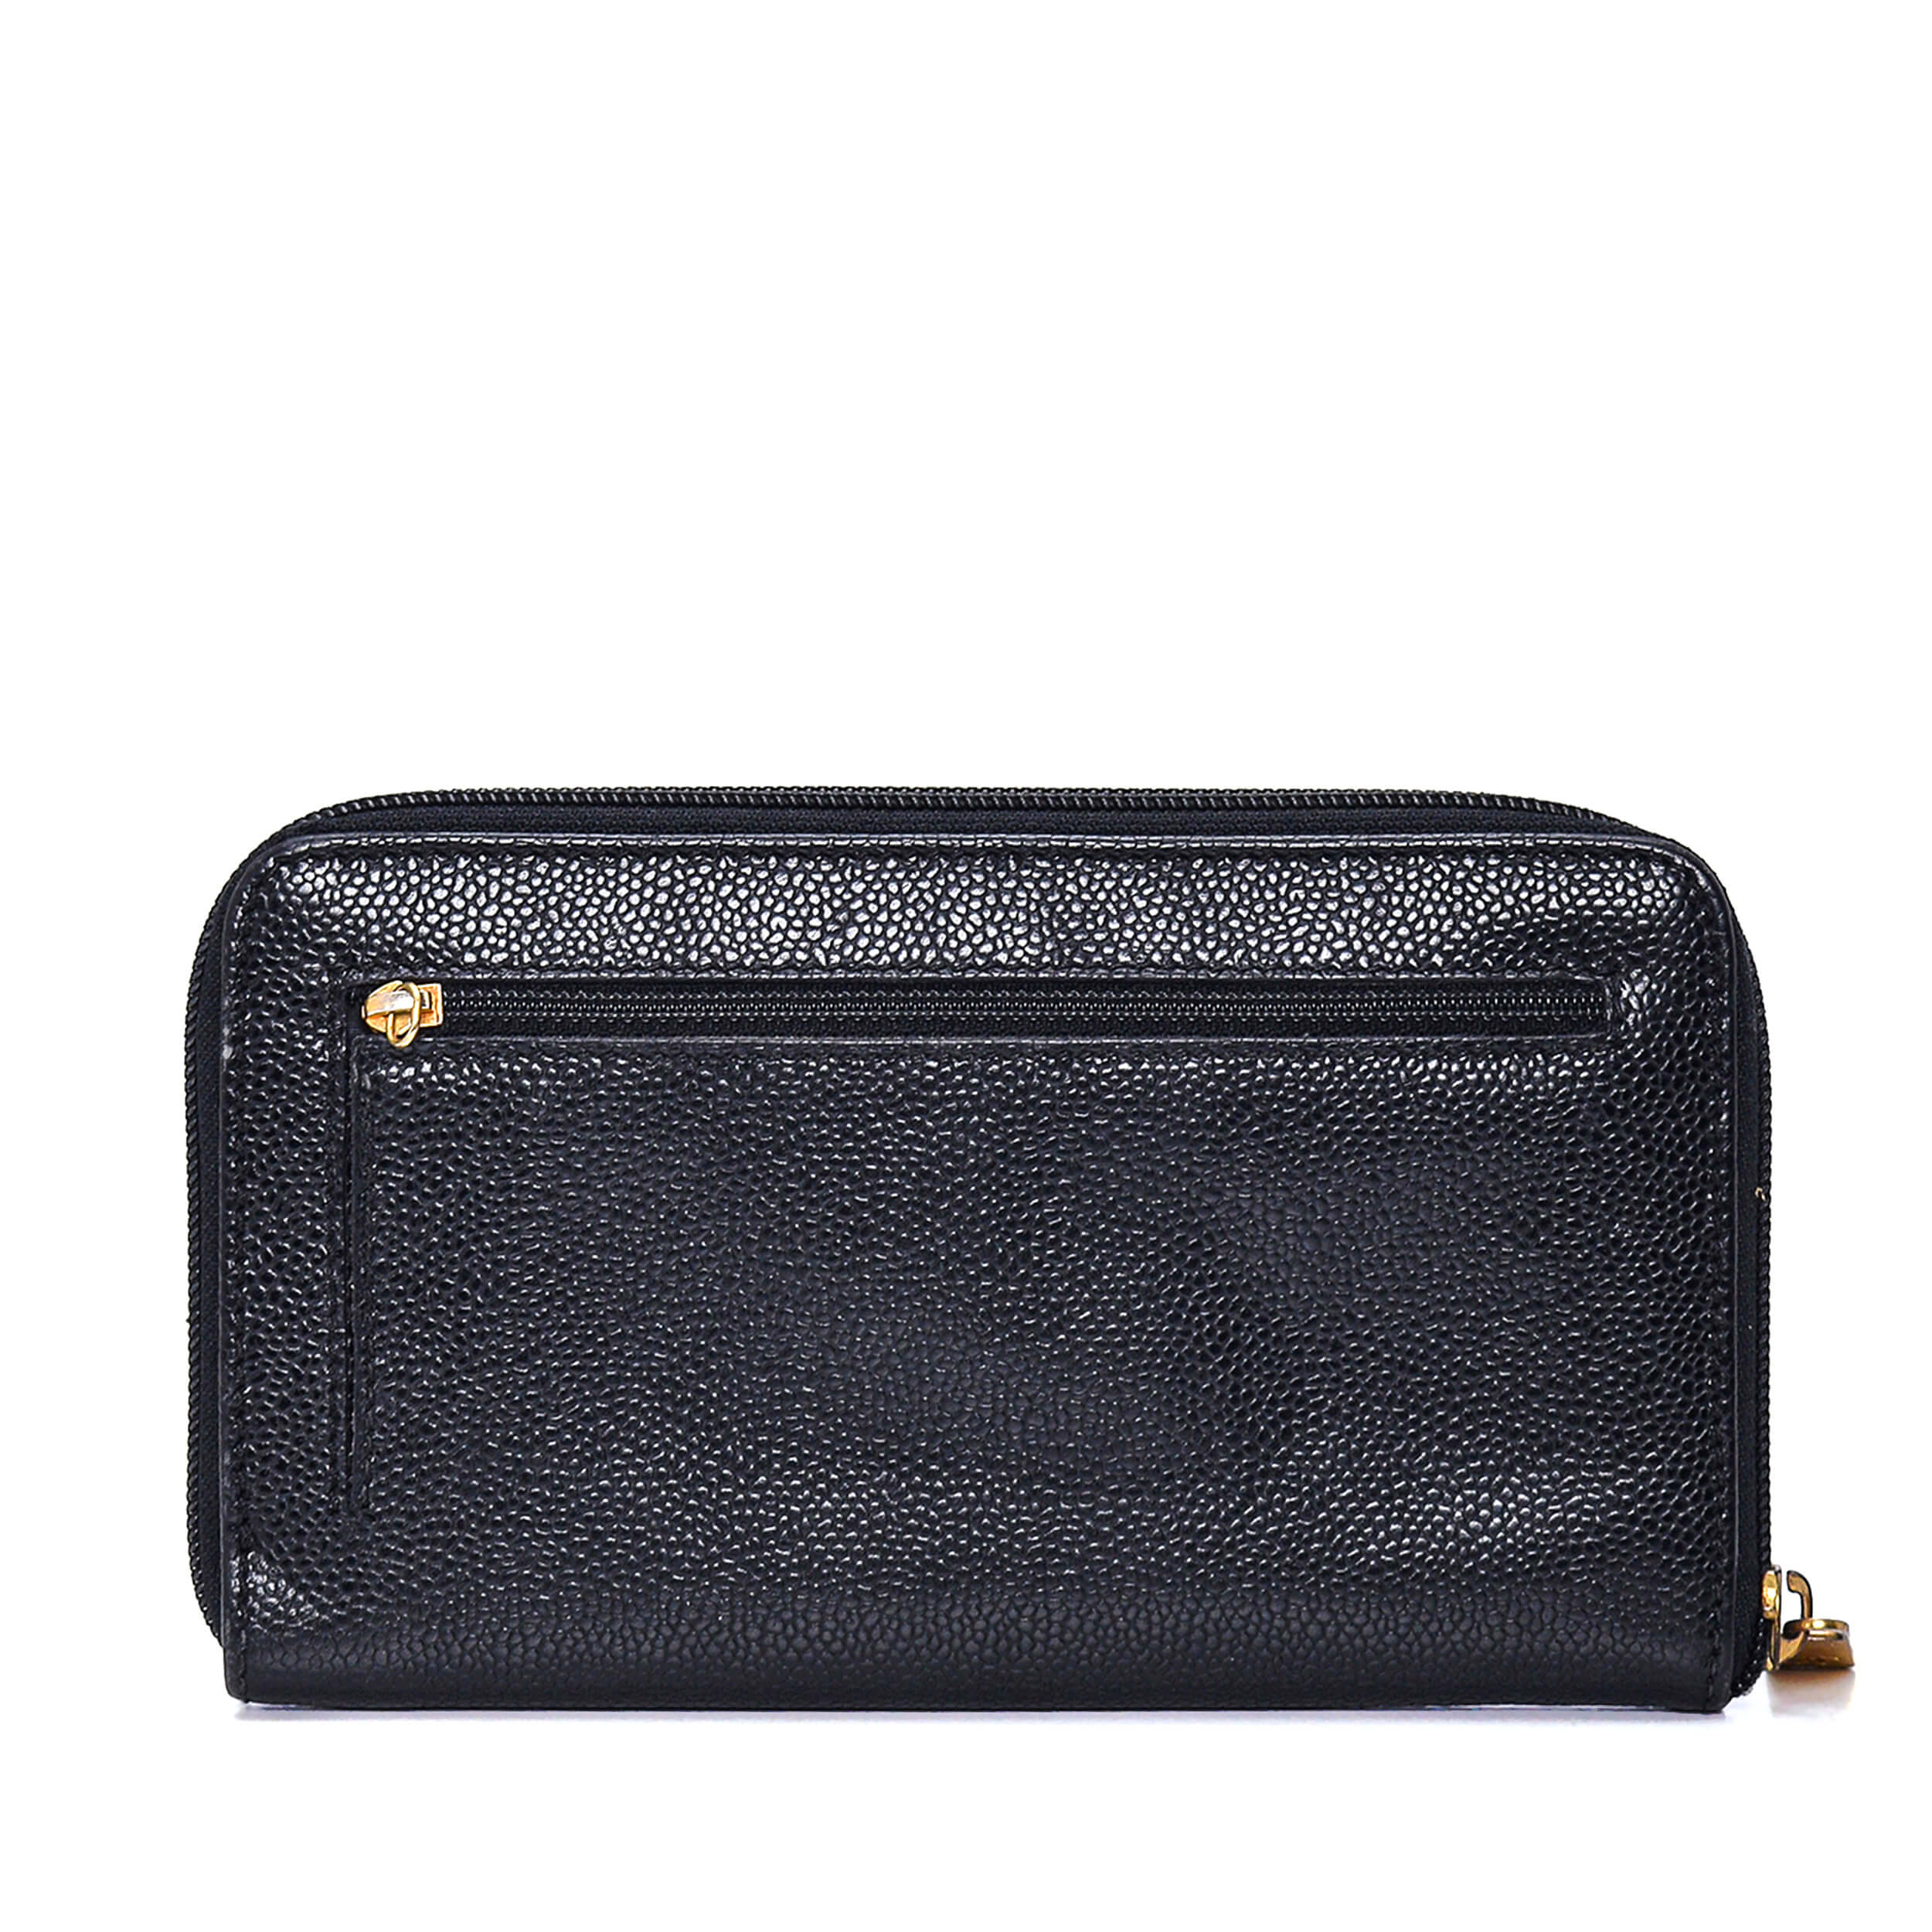 Chanel - Black Caviar Leather CC Timeless Zip Medium Wallet